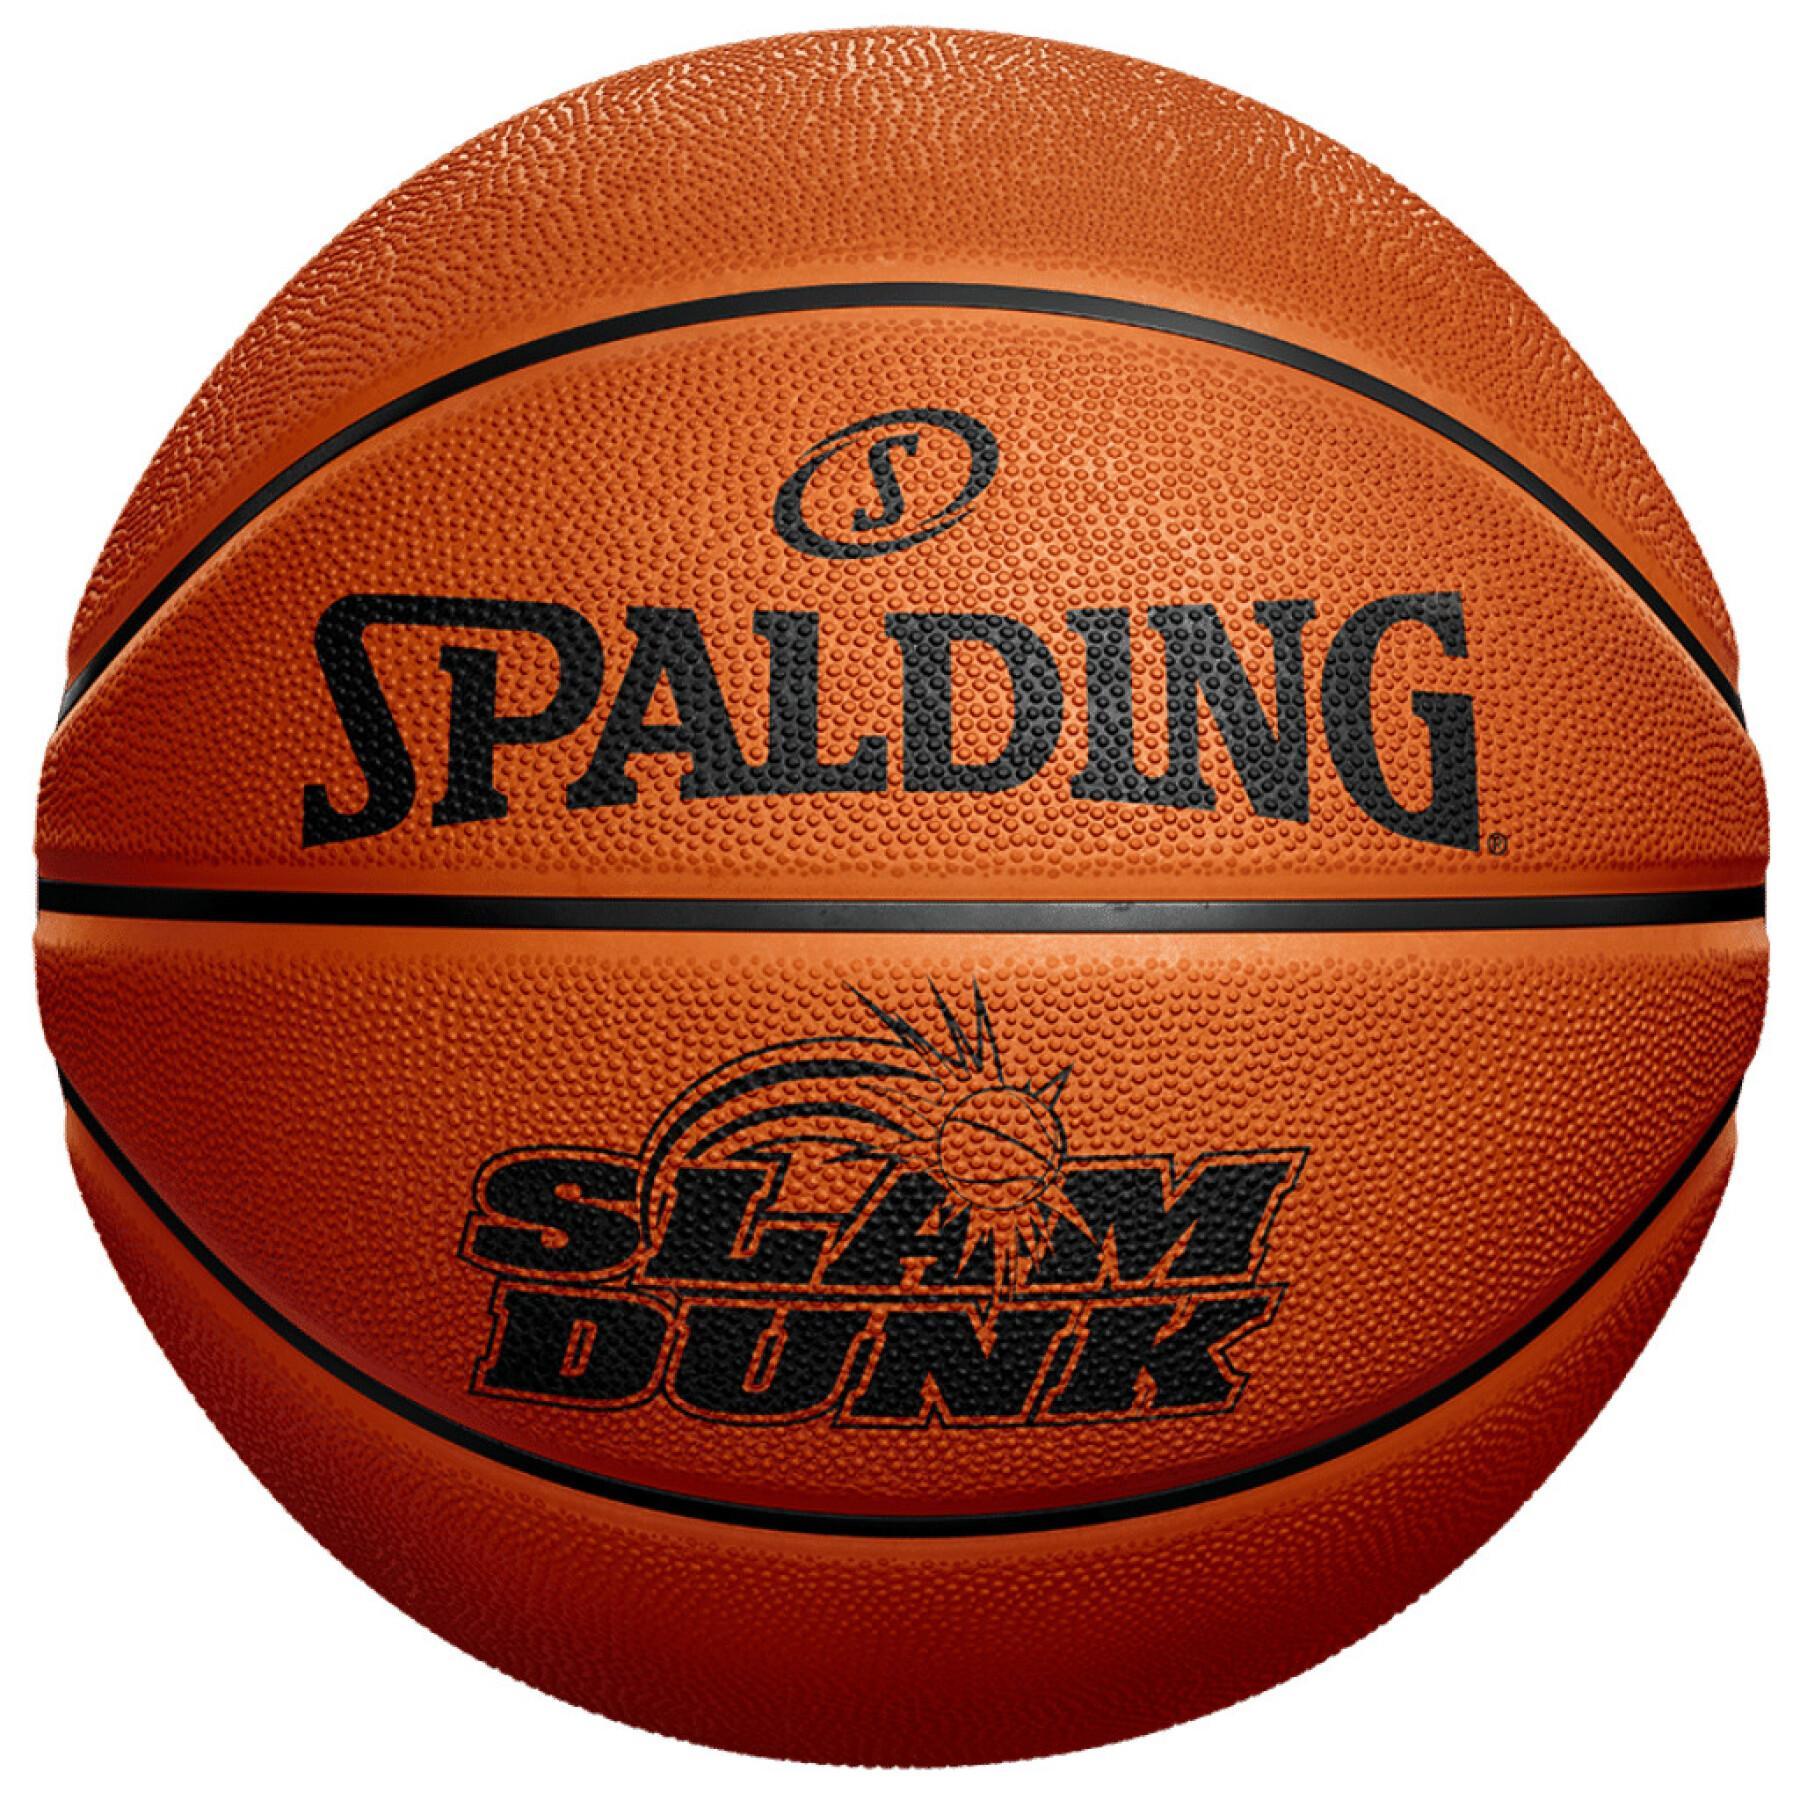 Basketbal Spalding Slam Dunk Rubber